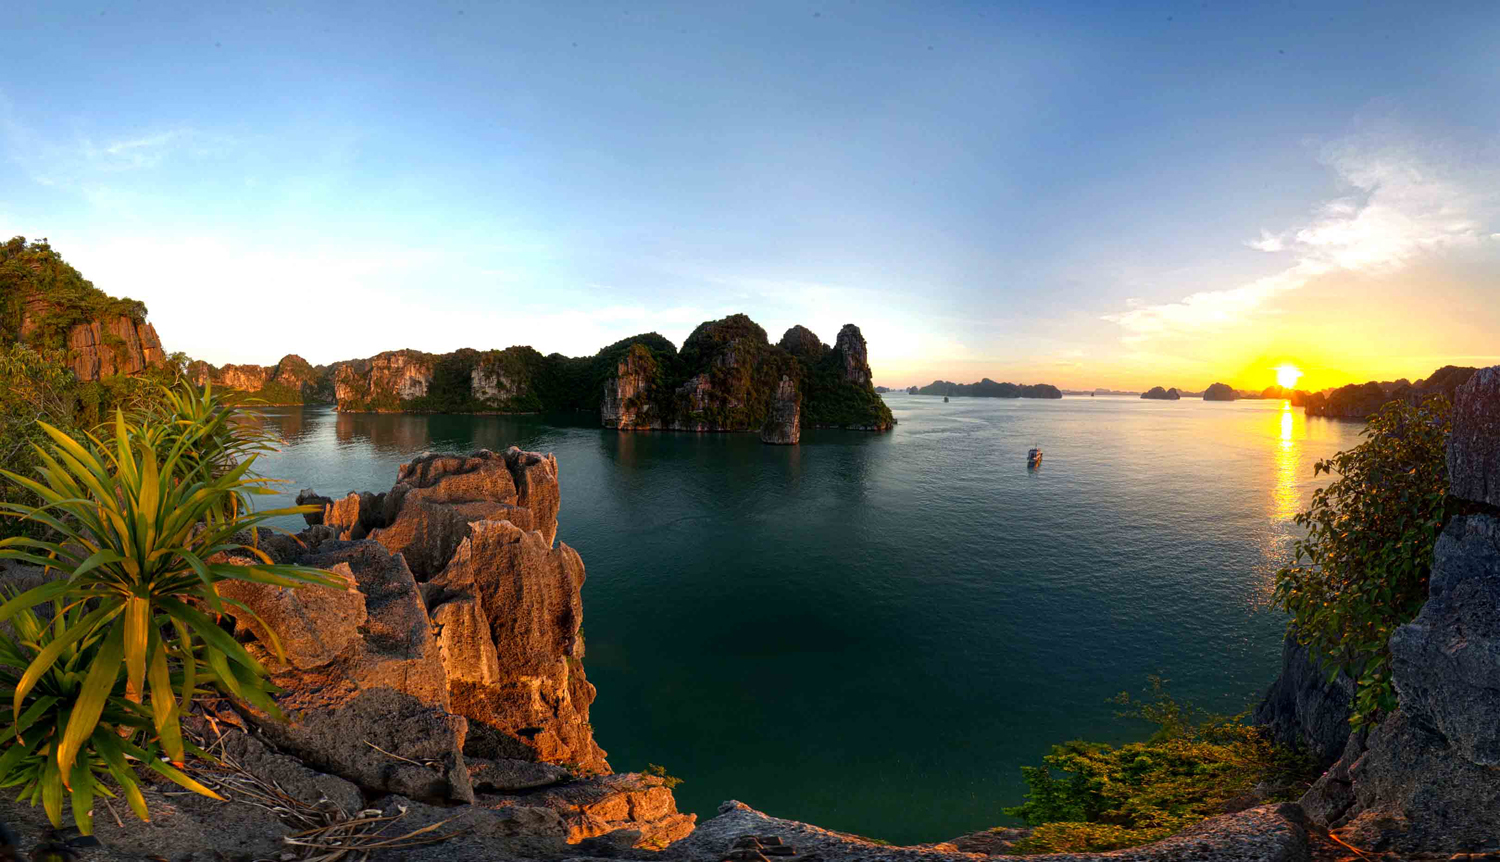 Amazing Halong Bay - Vietnam from flycam - drone